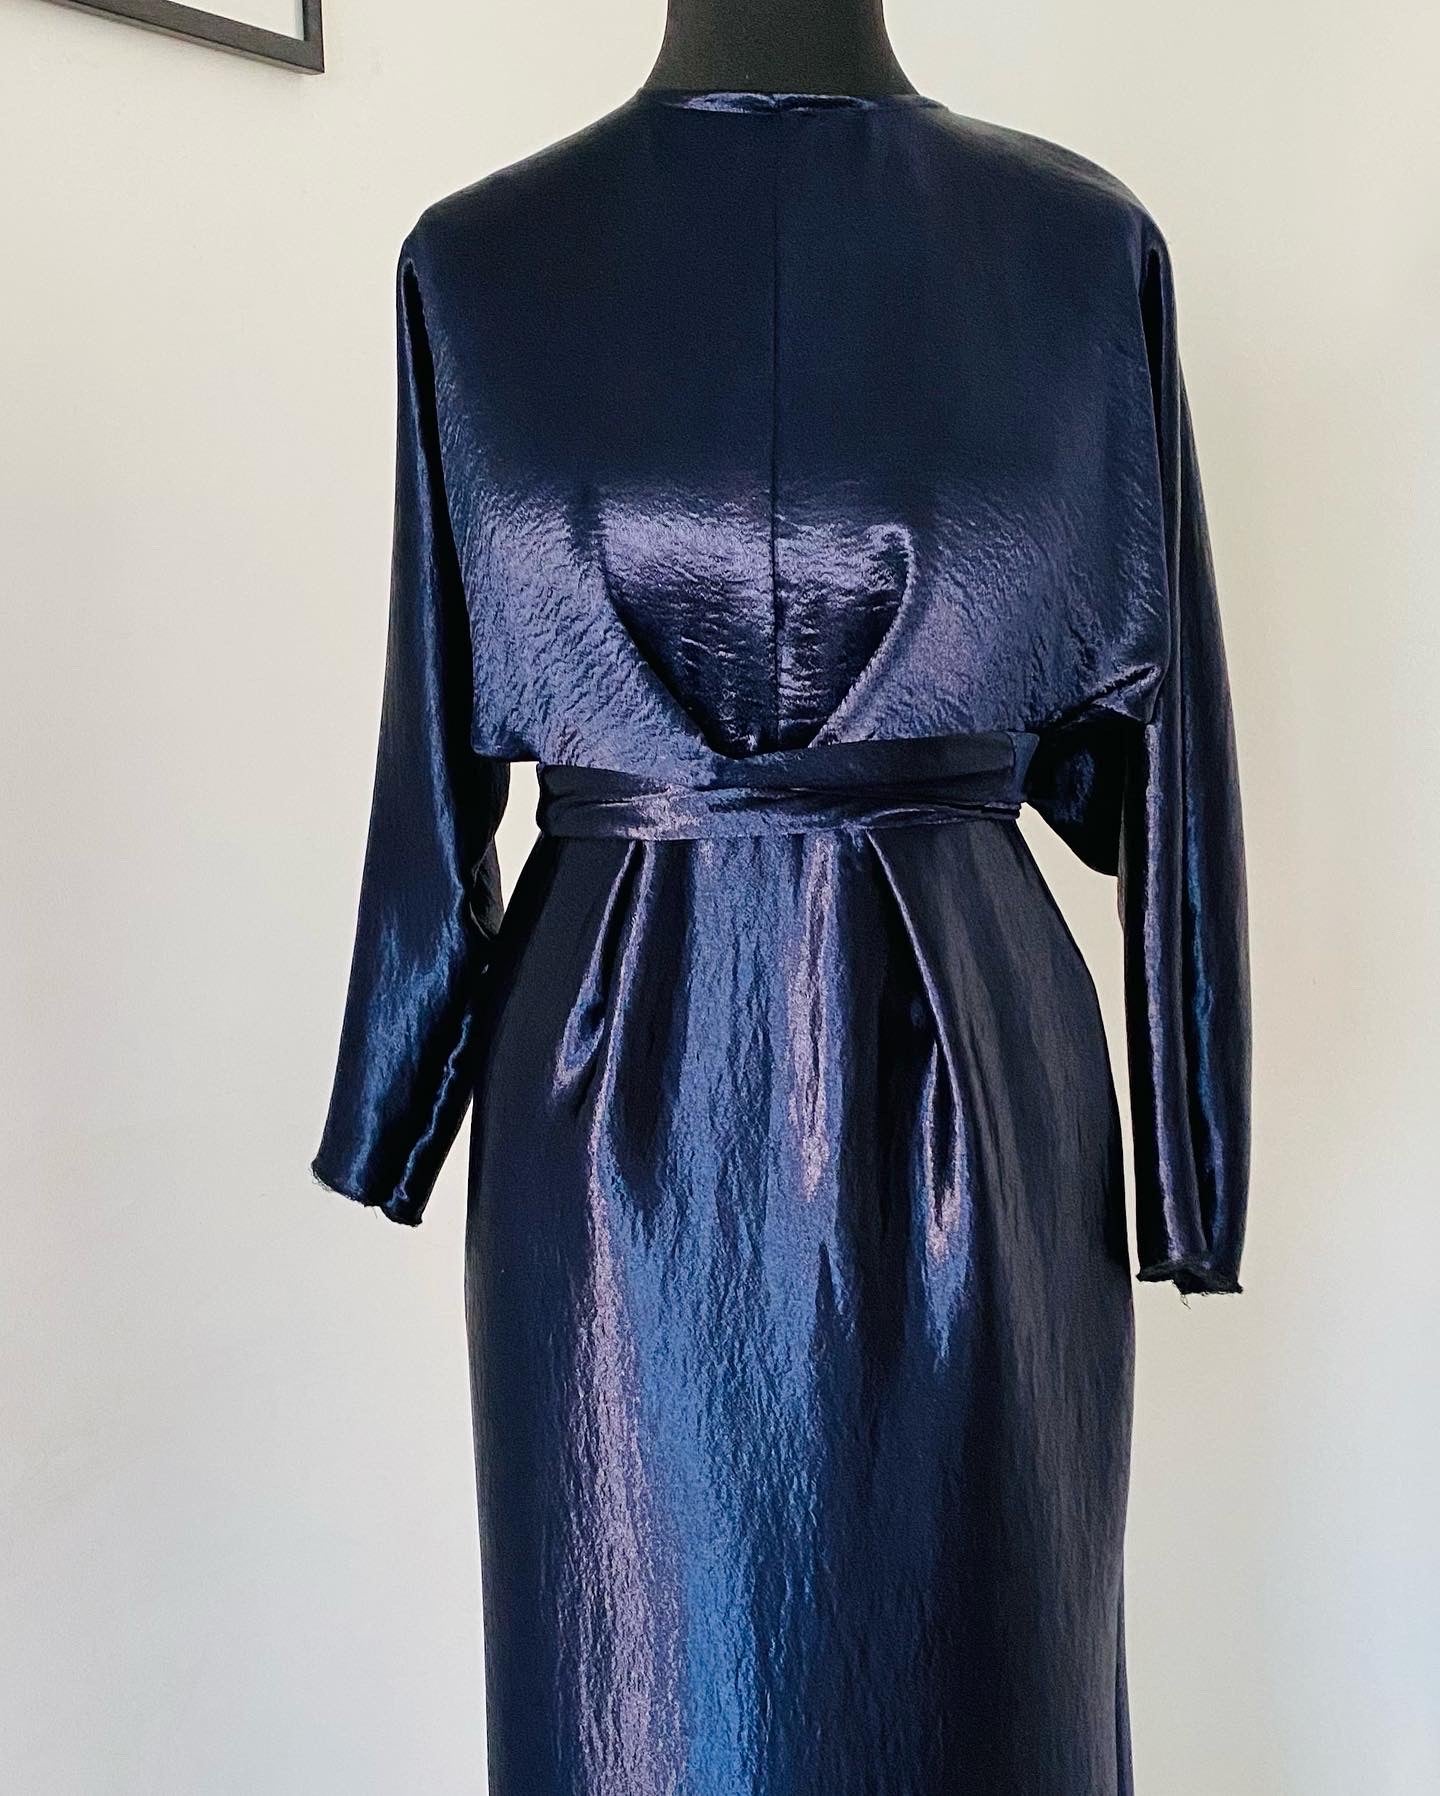 Robe demoiselle d’honneur manches longues - Robe Modest wear - En Satin bleu marine - Kaysol Couture